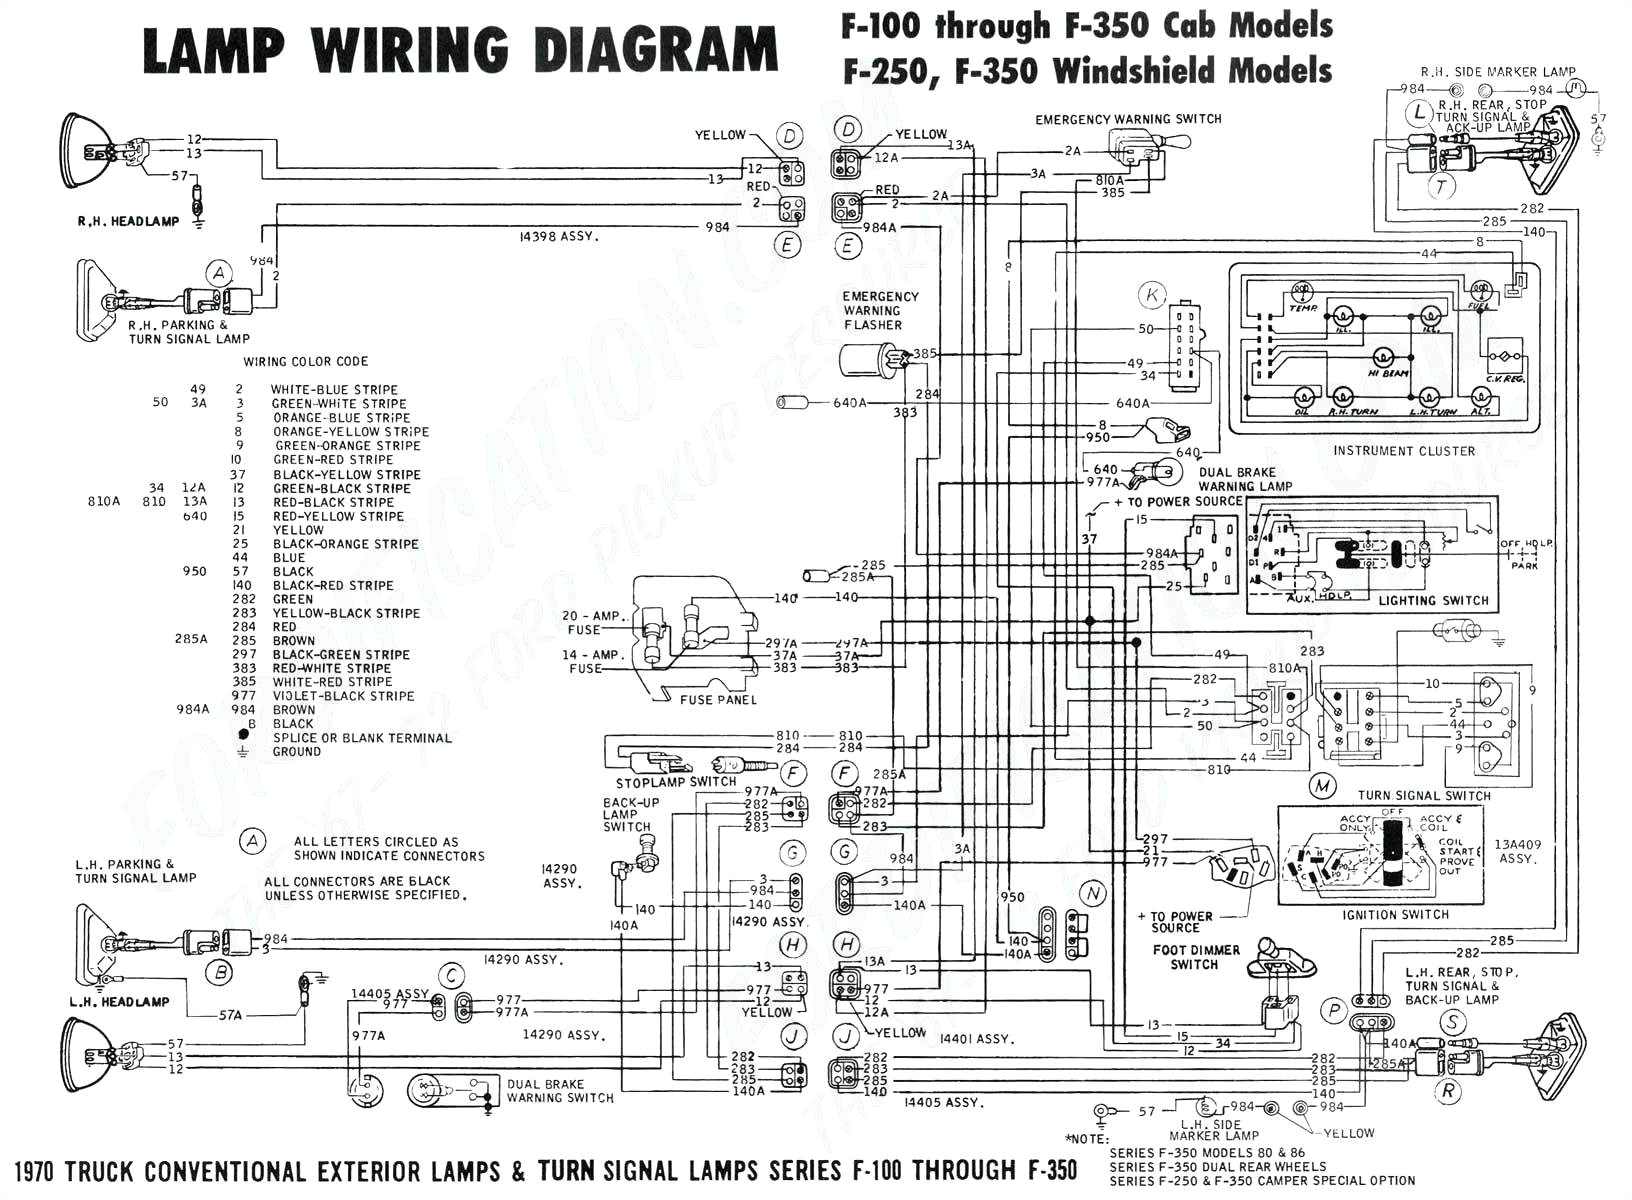 wiring switch diagram dorman 84824 electrical schematic wiring diagram dorman wiring a light switch